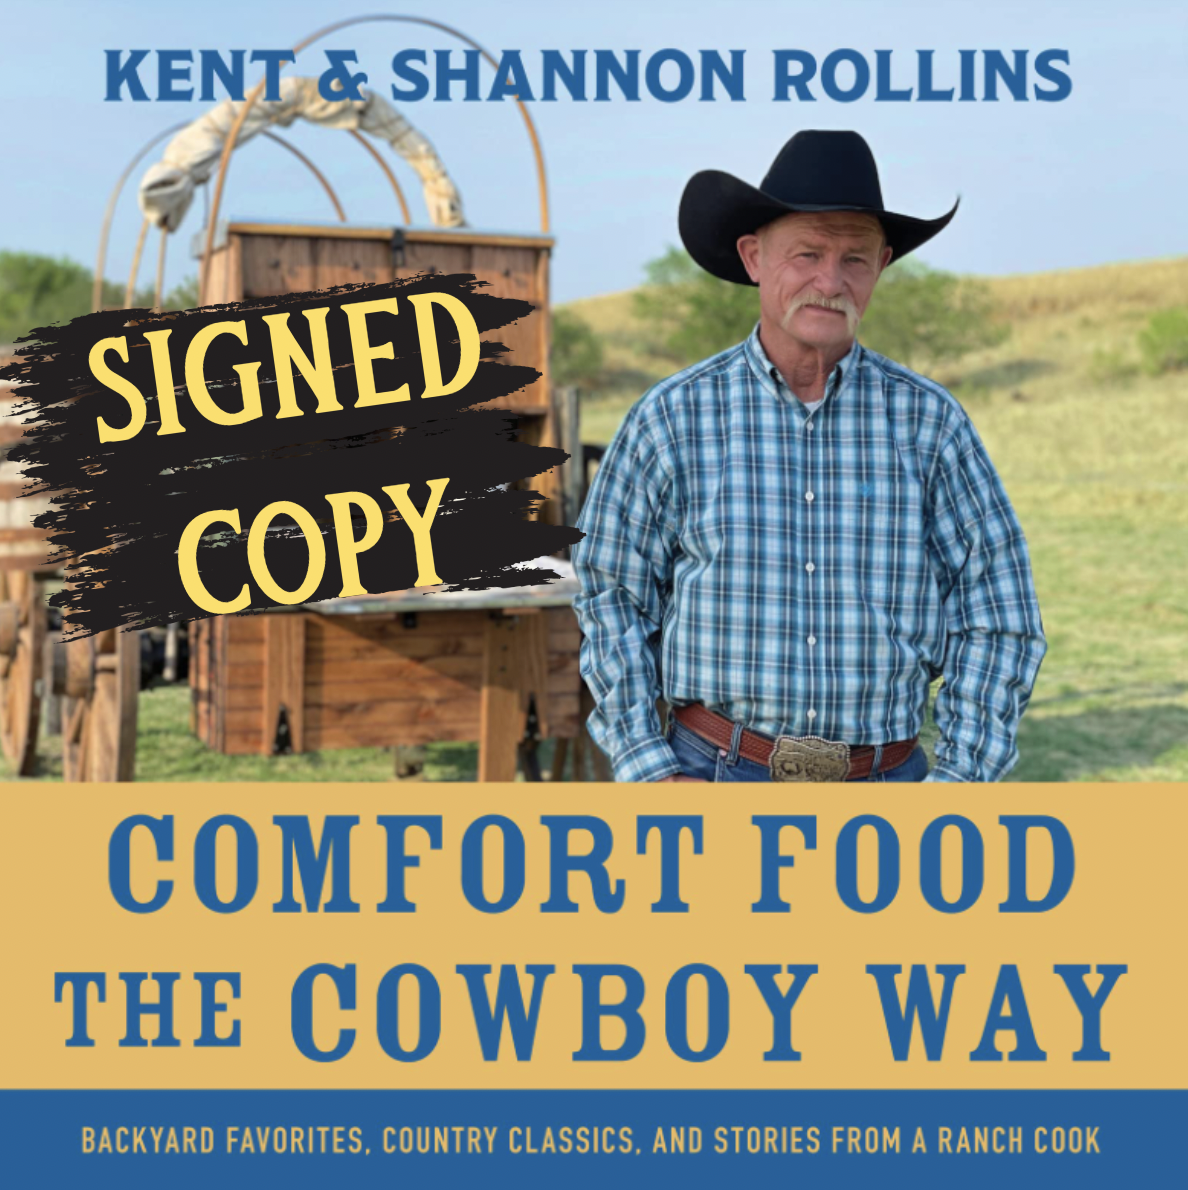 Pre Order: Comfort Food the Cowboy Way